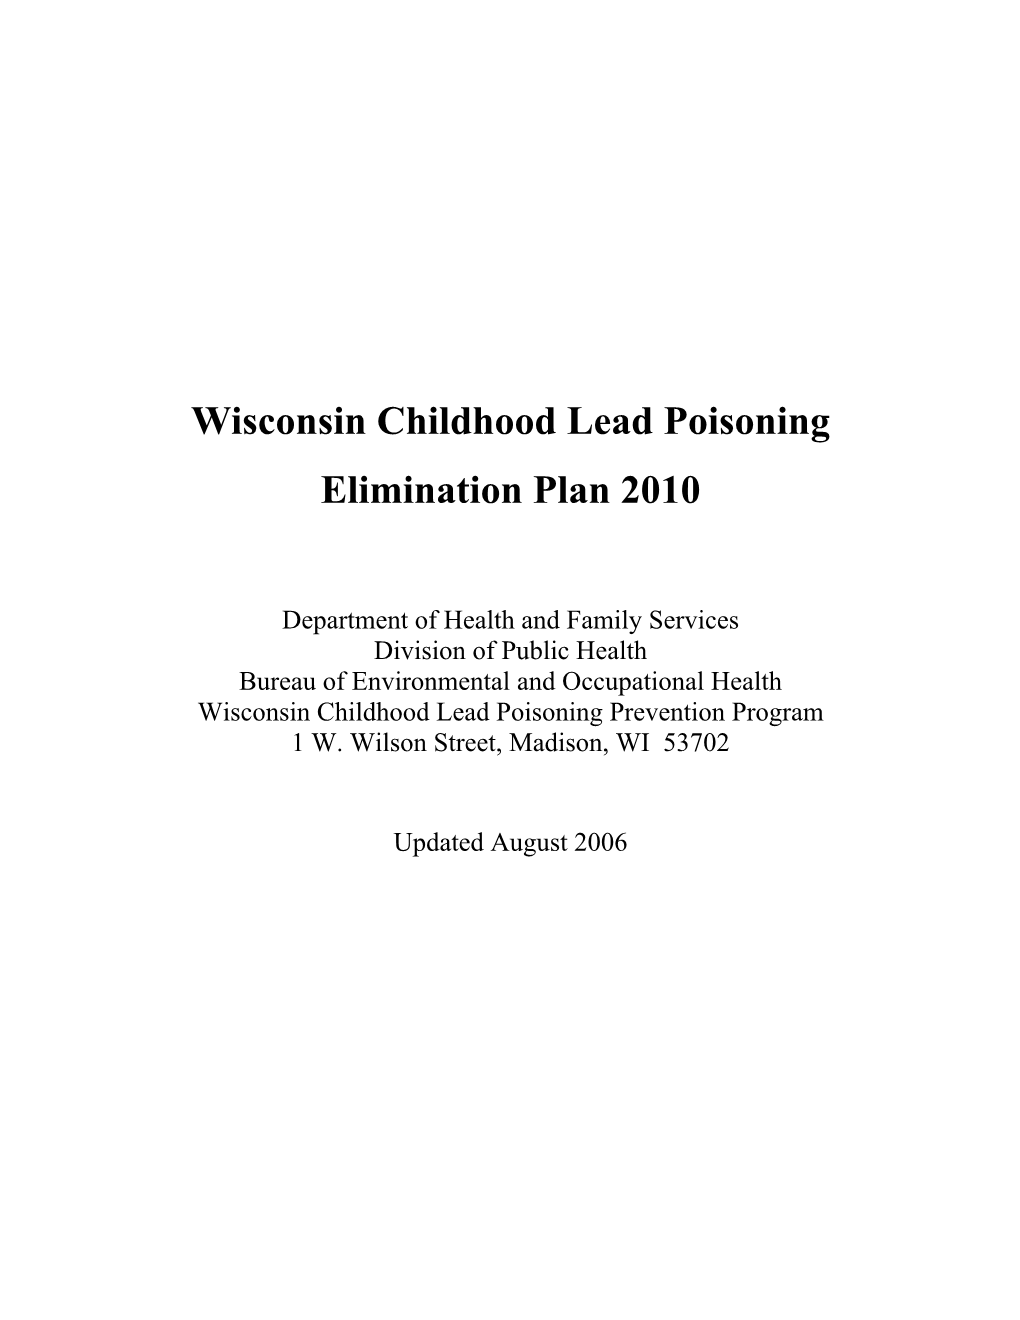 Wisconsin Childhood Lead Poisoning Elimination Plan 2010